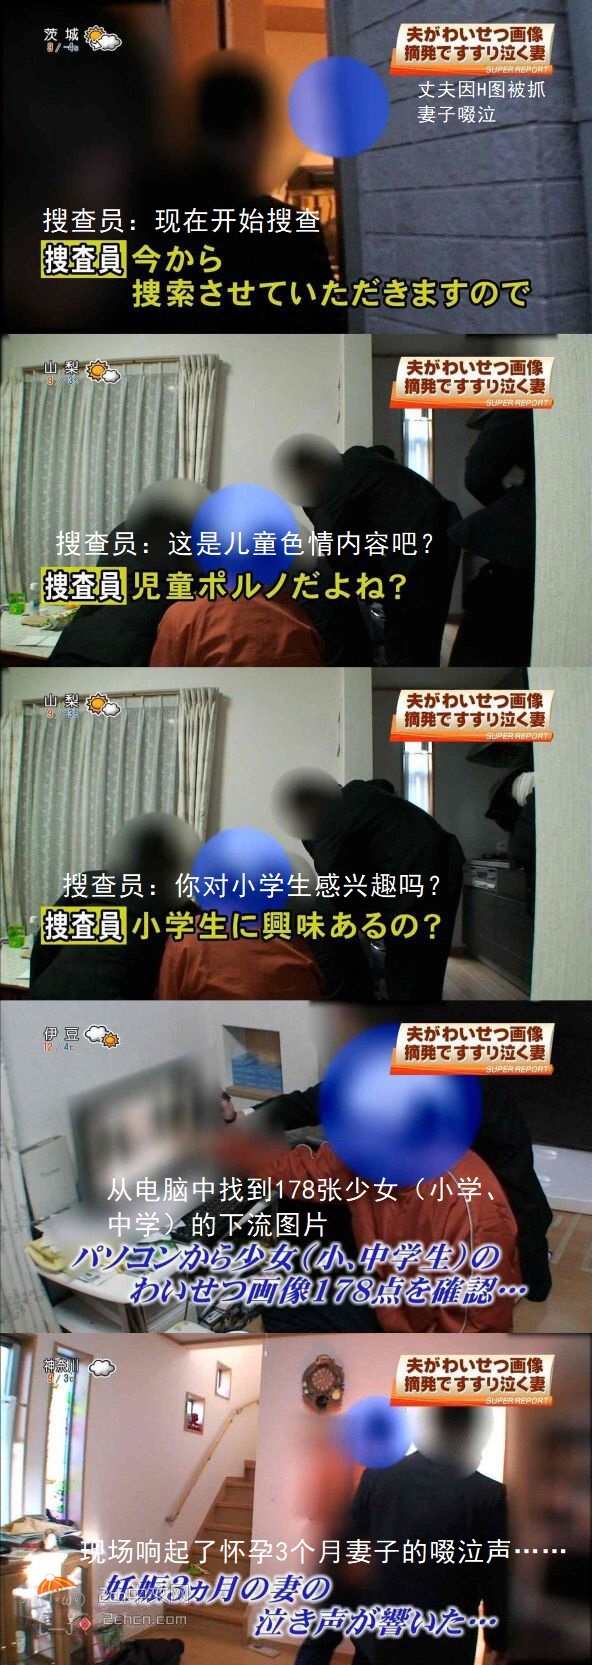 2ch：日本萝莉控被捕的瞬间太悲哀了……